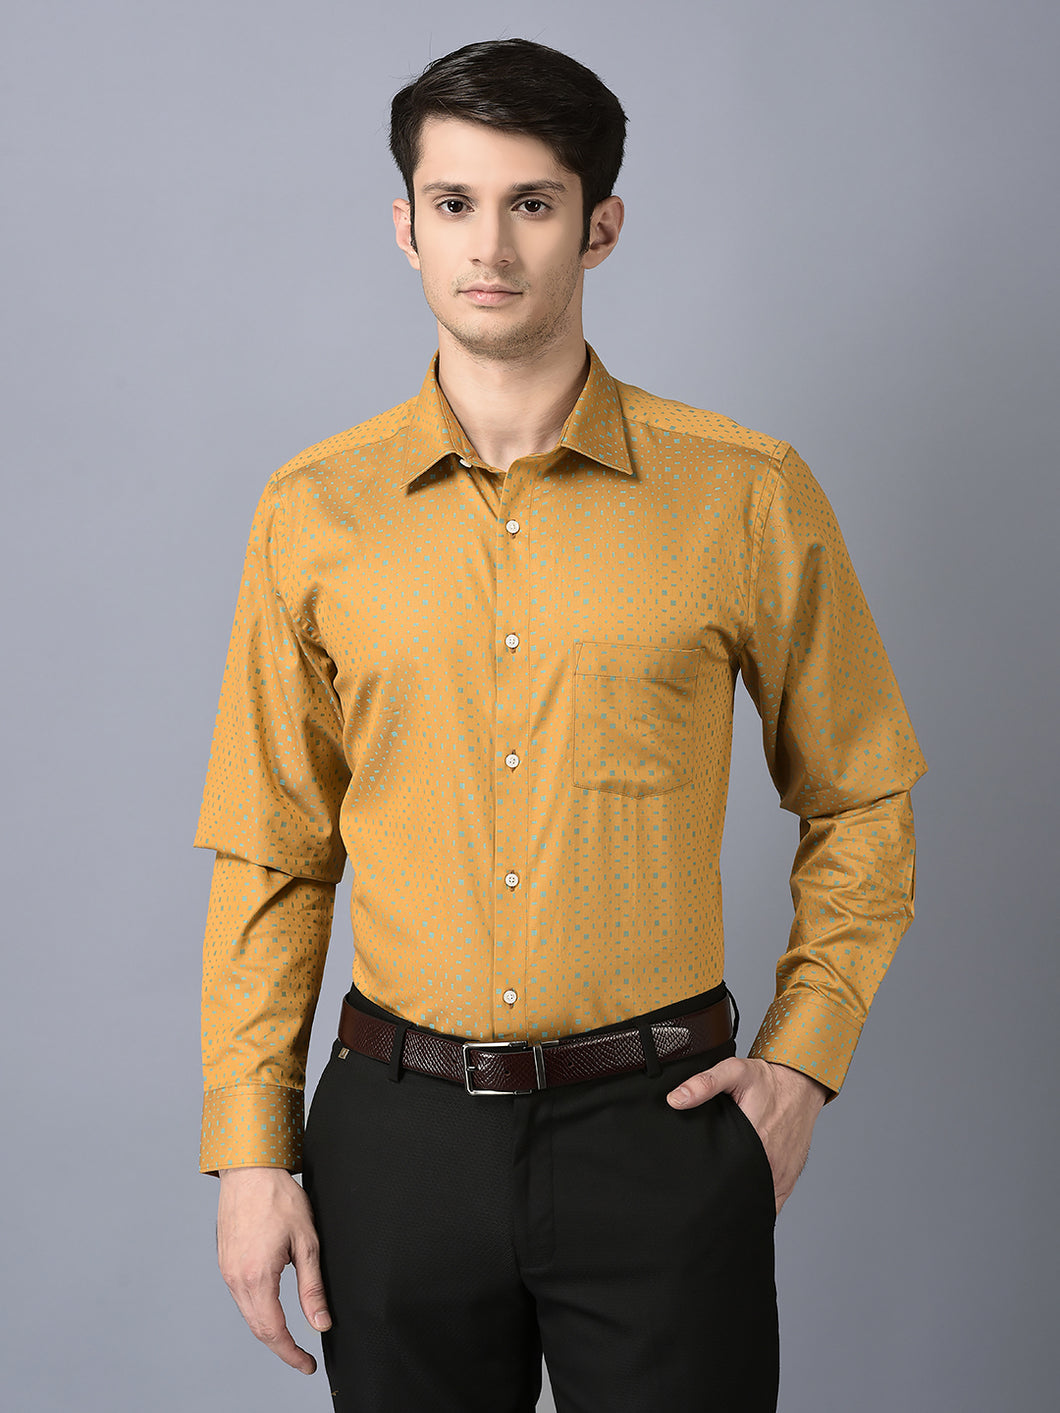 CANOE MEN Formal Shirt Mustard Color Cotton Fabric Button Closure Printed